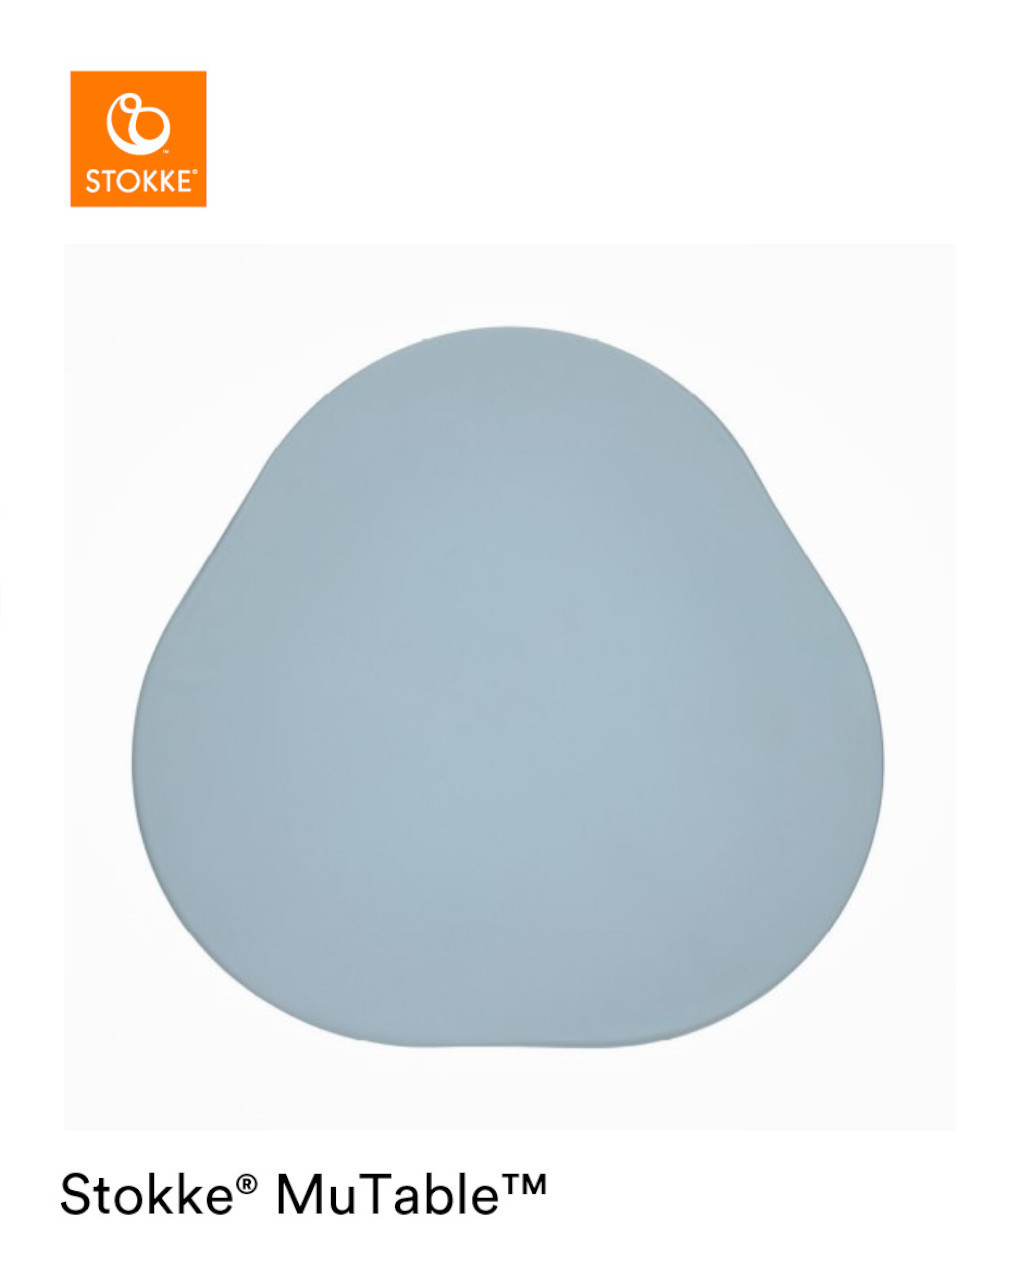 Stokke® mutable™ v2 capa de silicone azul ardósia - Stokke